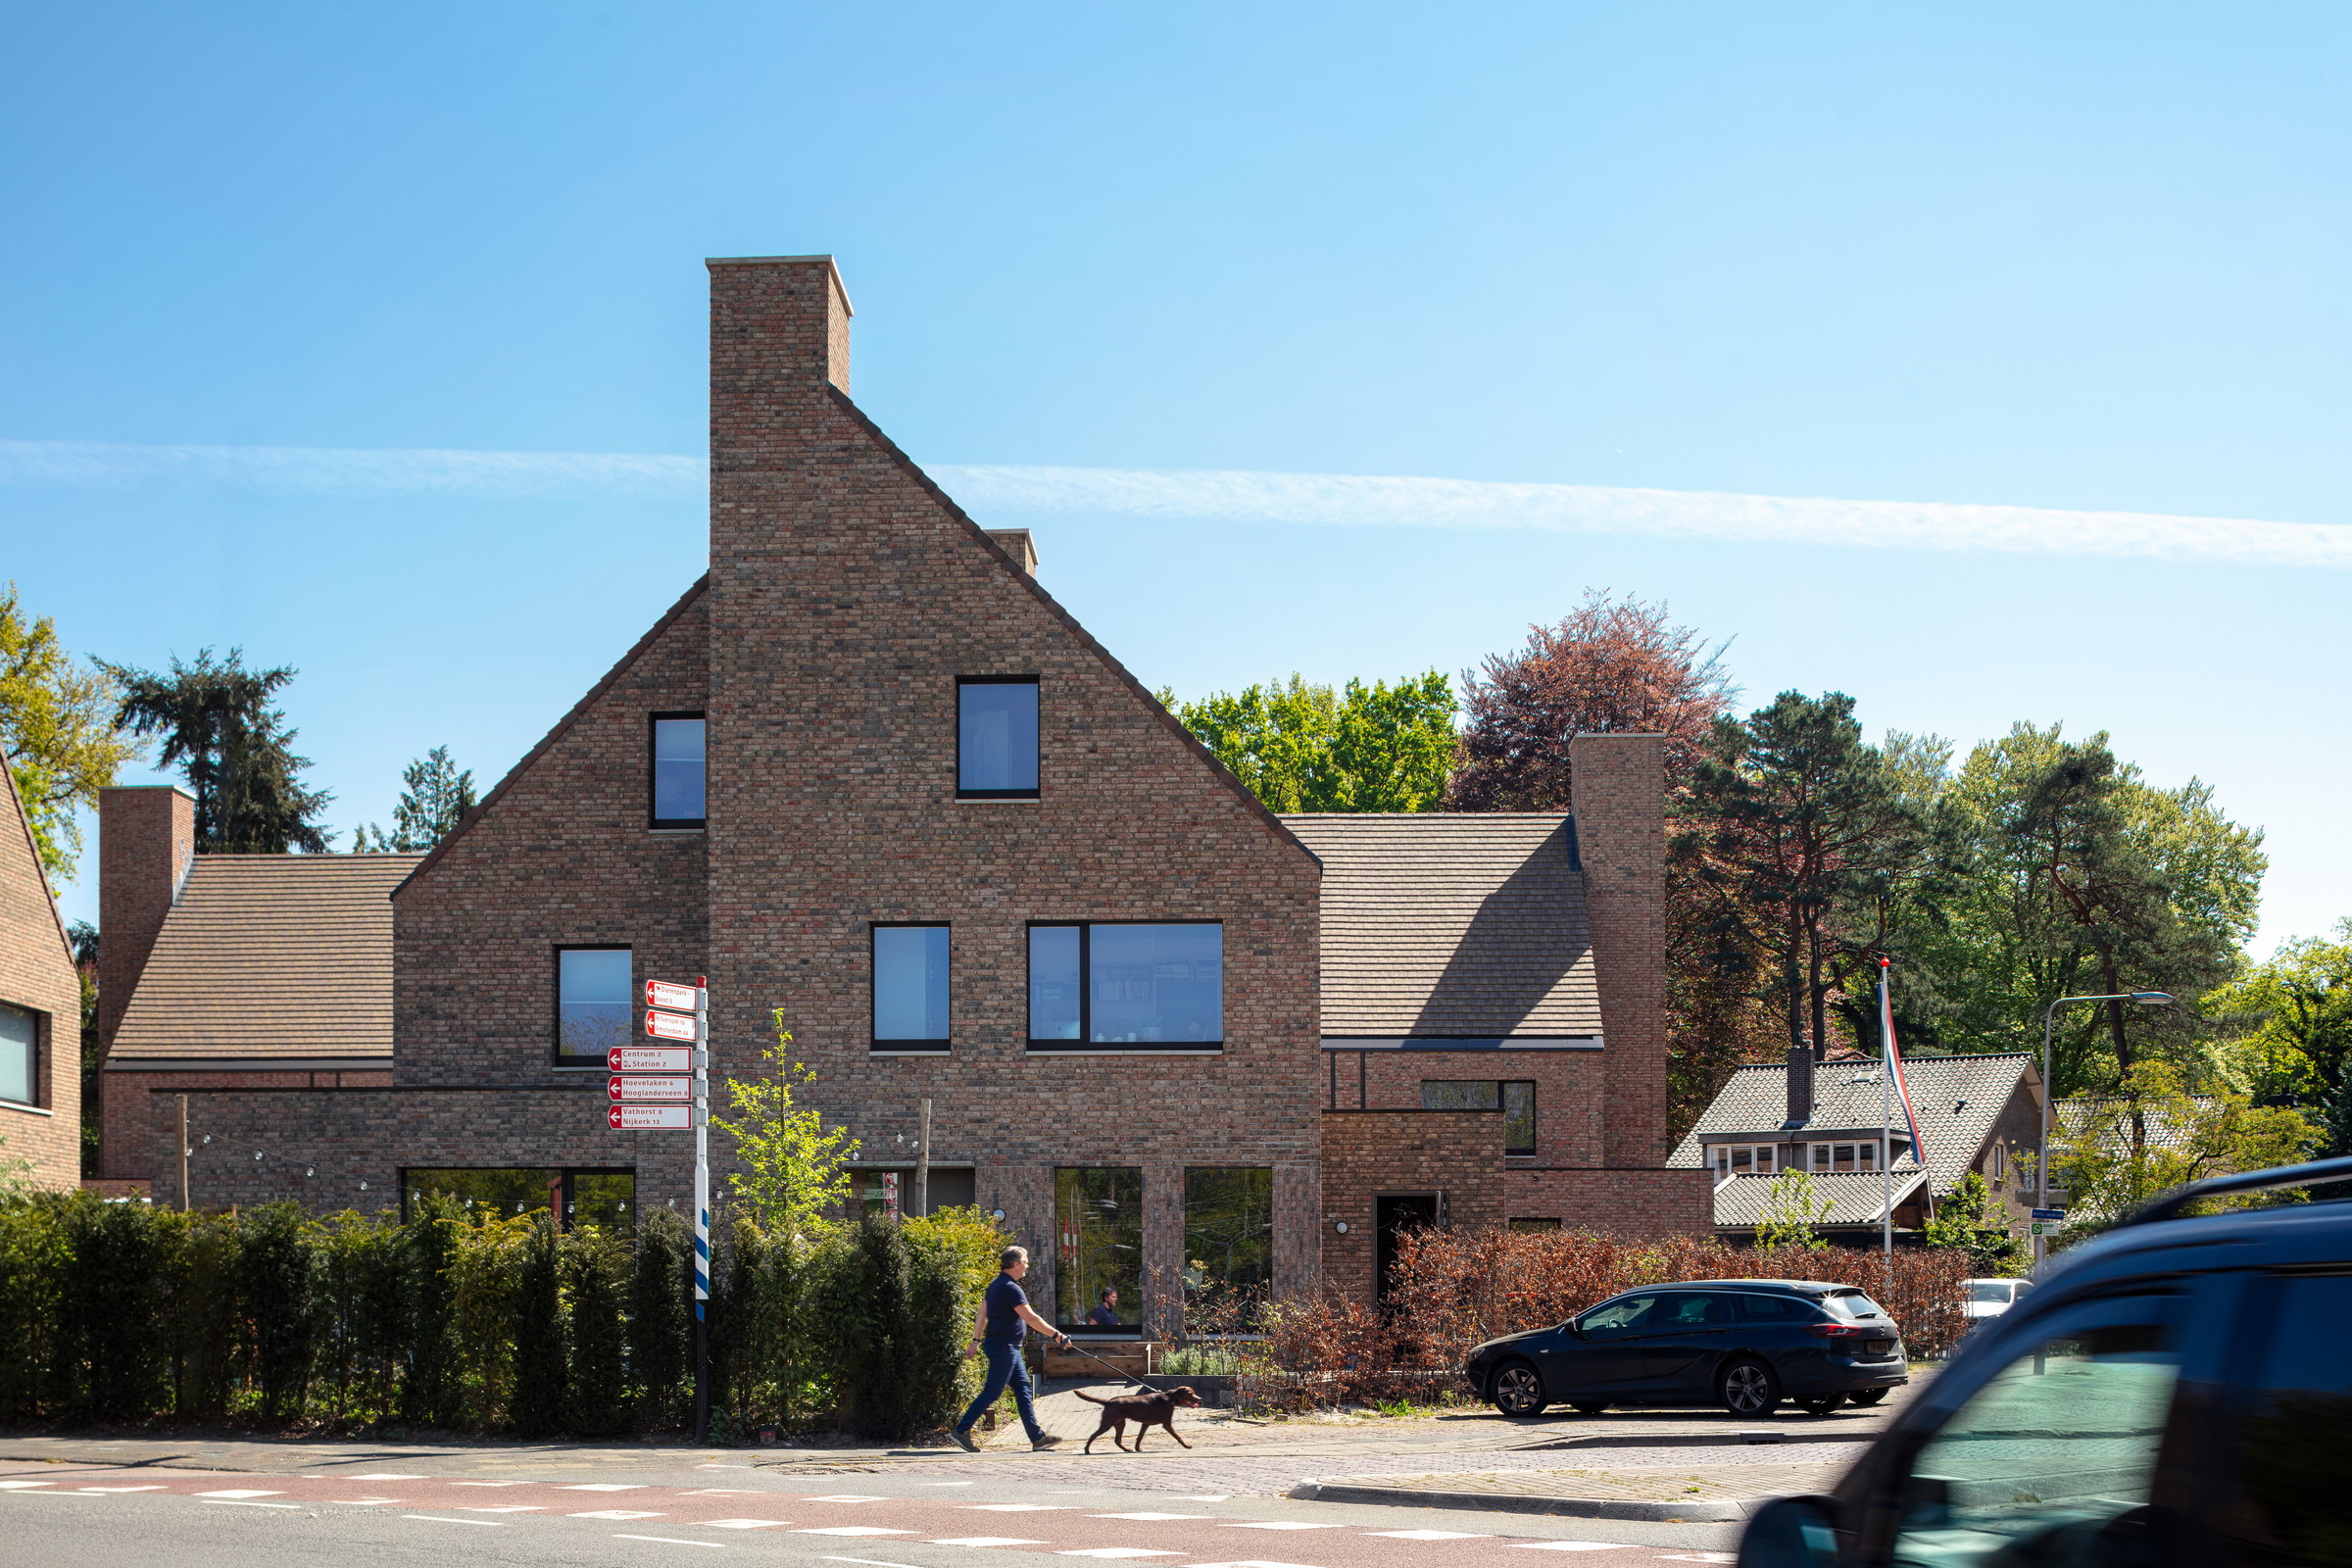 102-Zecc_Architecten-Monnickenhof-Amersfoort-housing.JPG